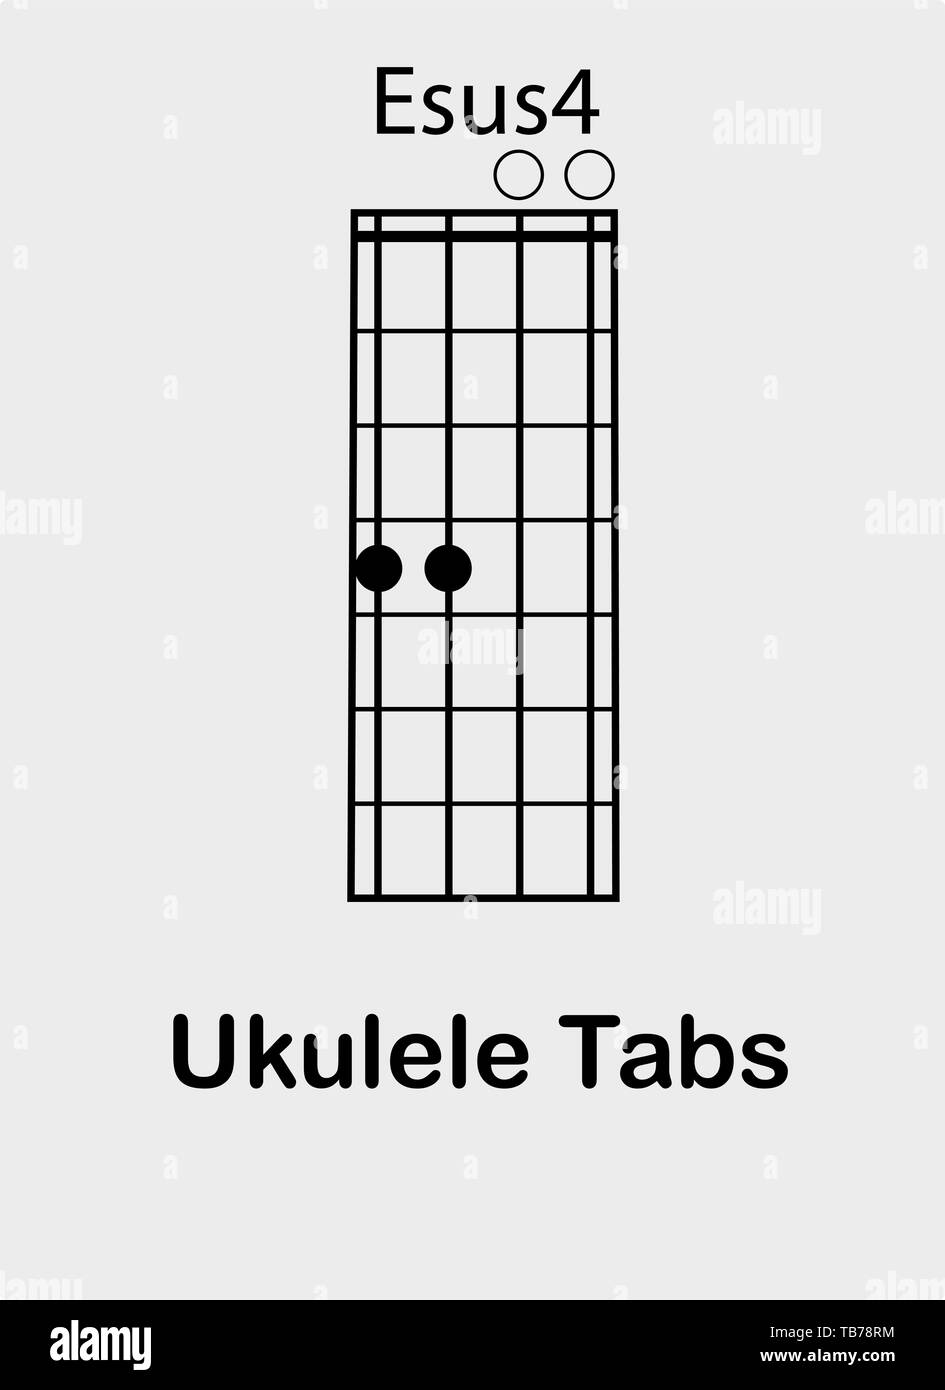 Ukulele avec tabulation E sus4 chord, vector illustration Illustration de Vecteur